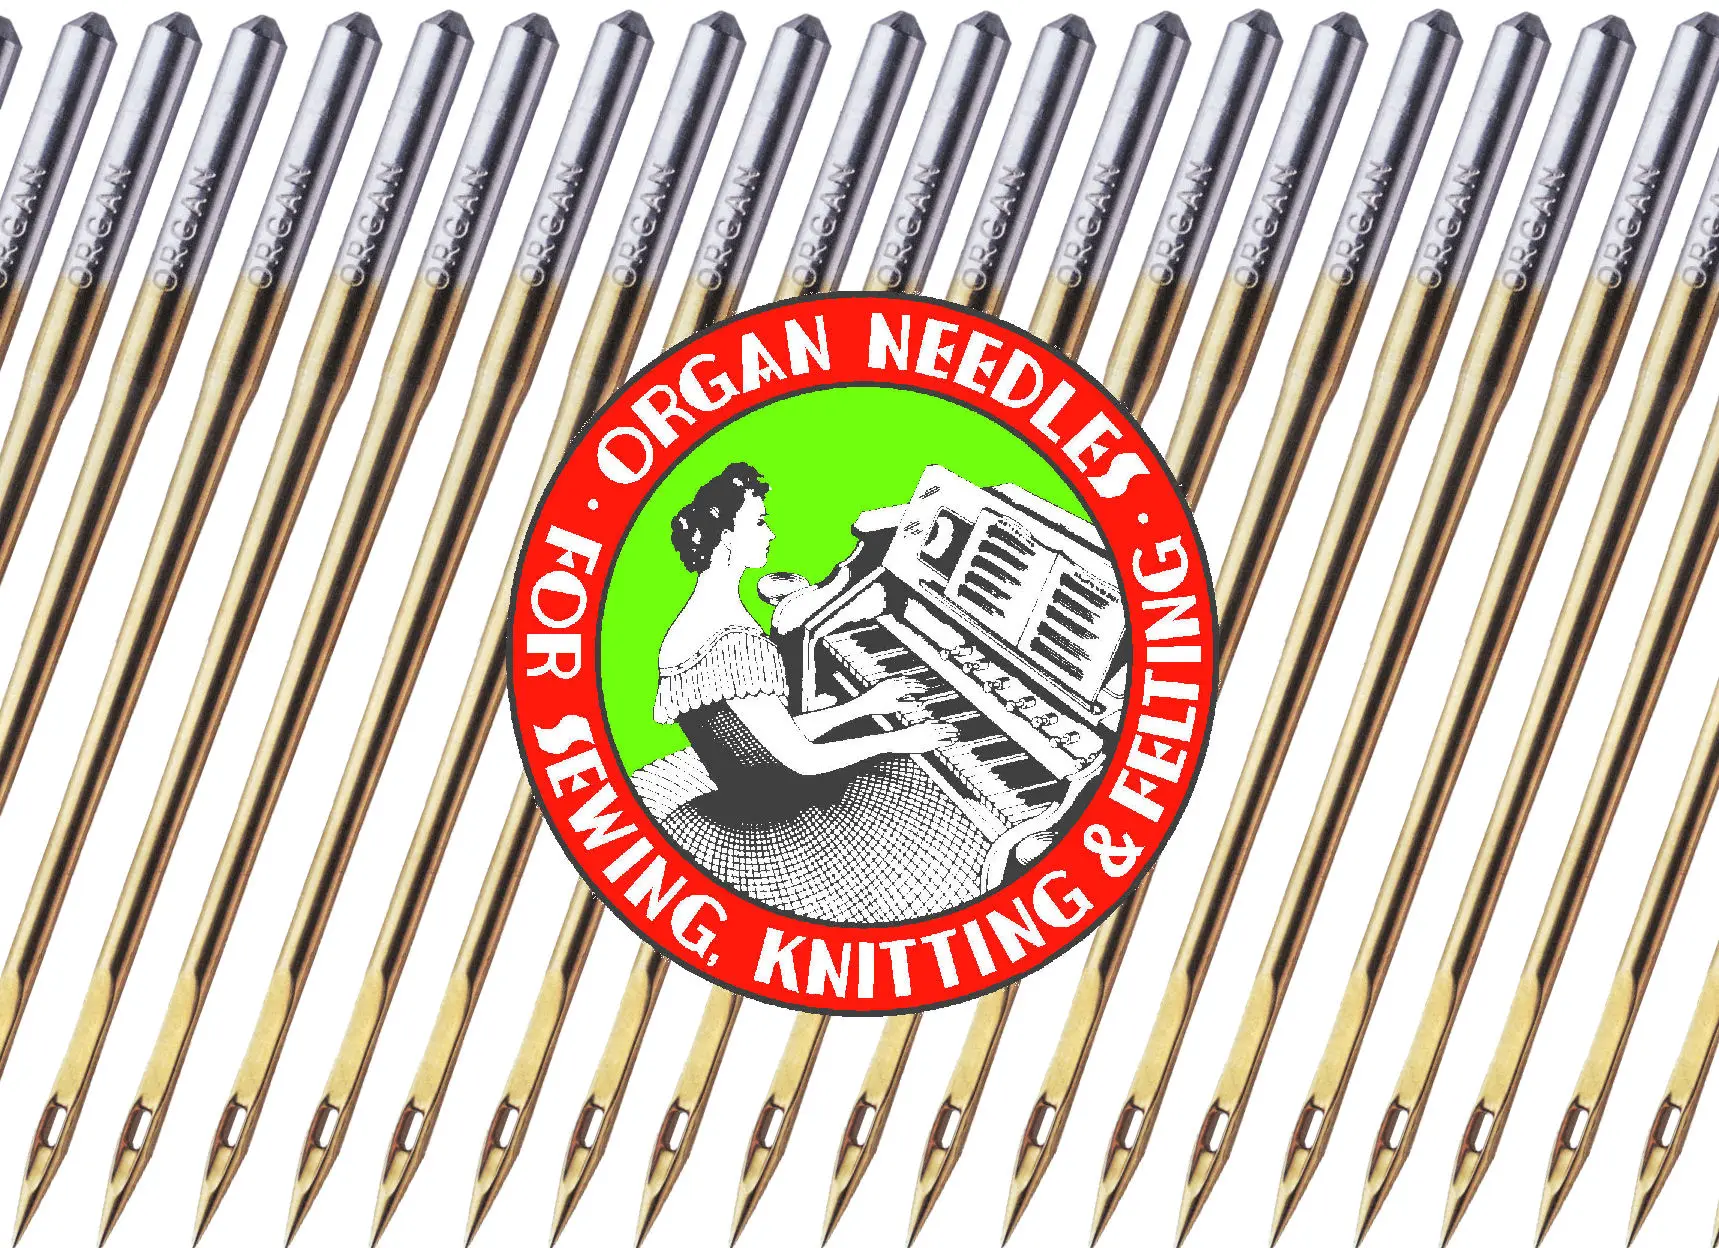 SINGER Universal Regular Point & Ball Point Titanium Sewing Machine Needles,  Size 80/12, 90/14, 100/16 - 8 Count 